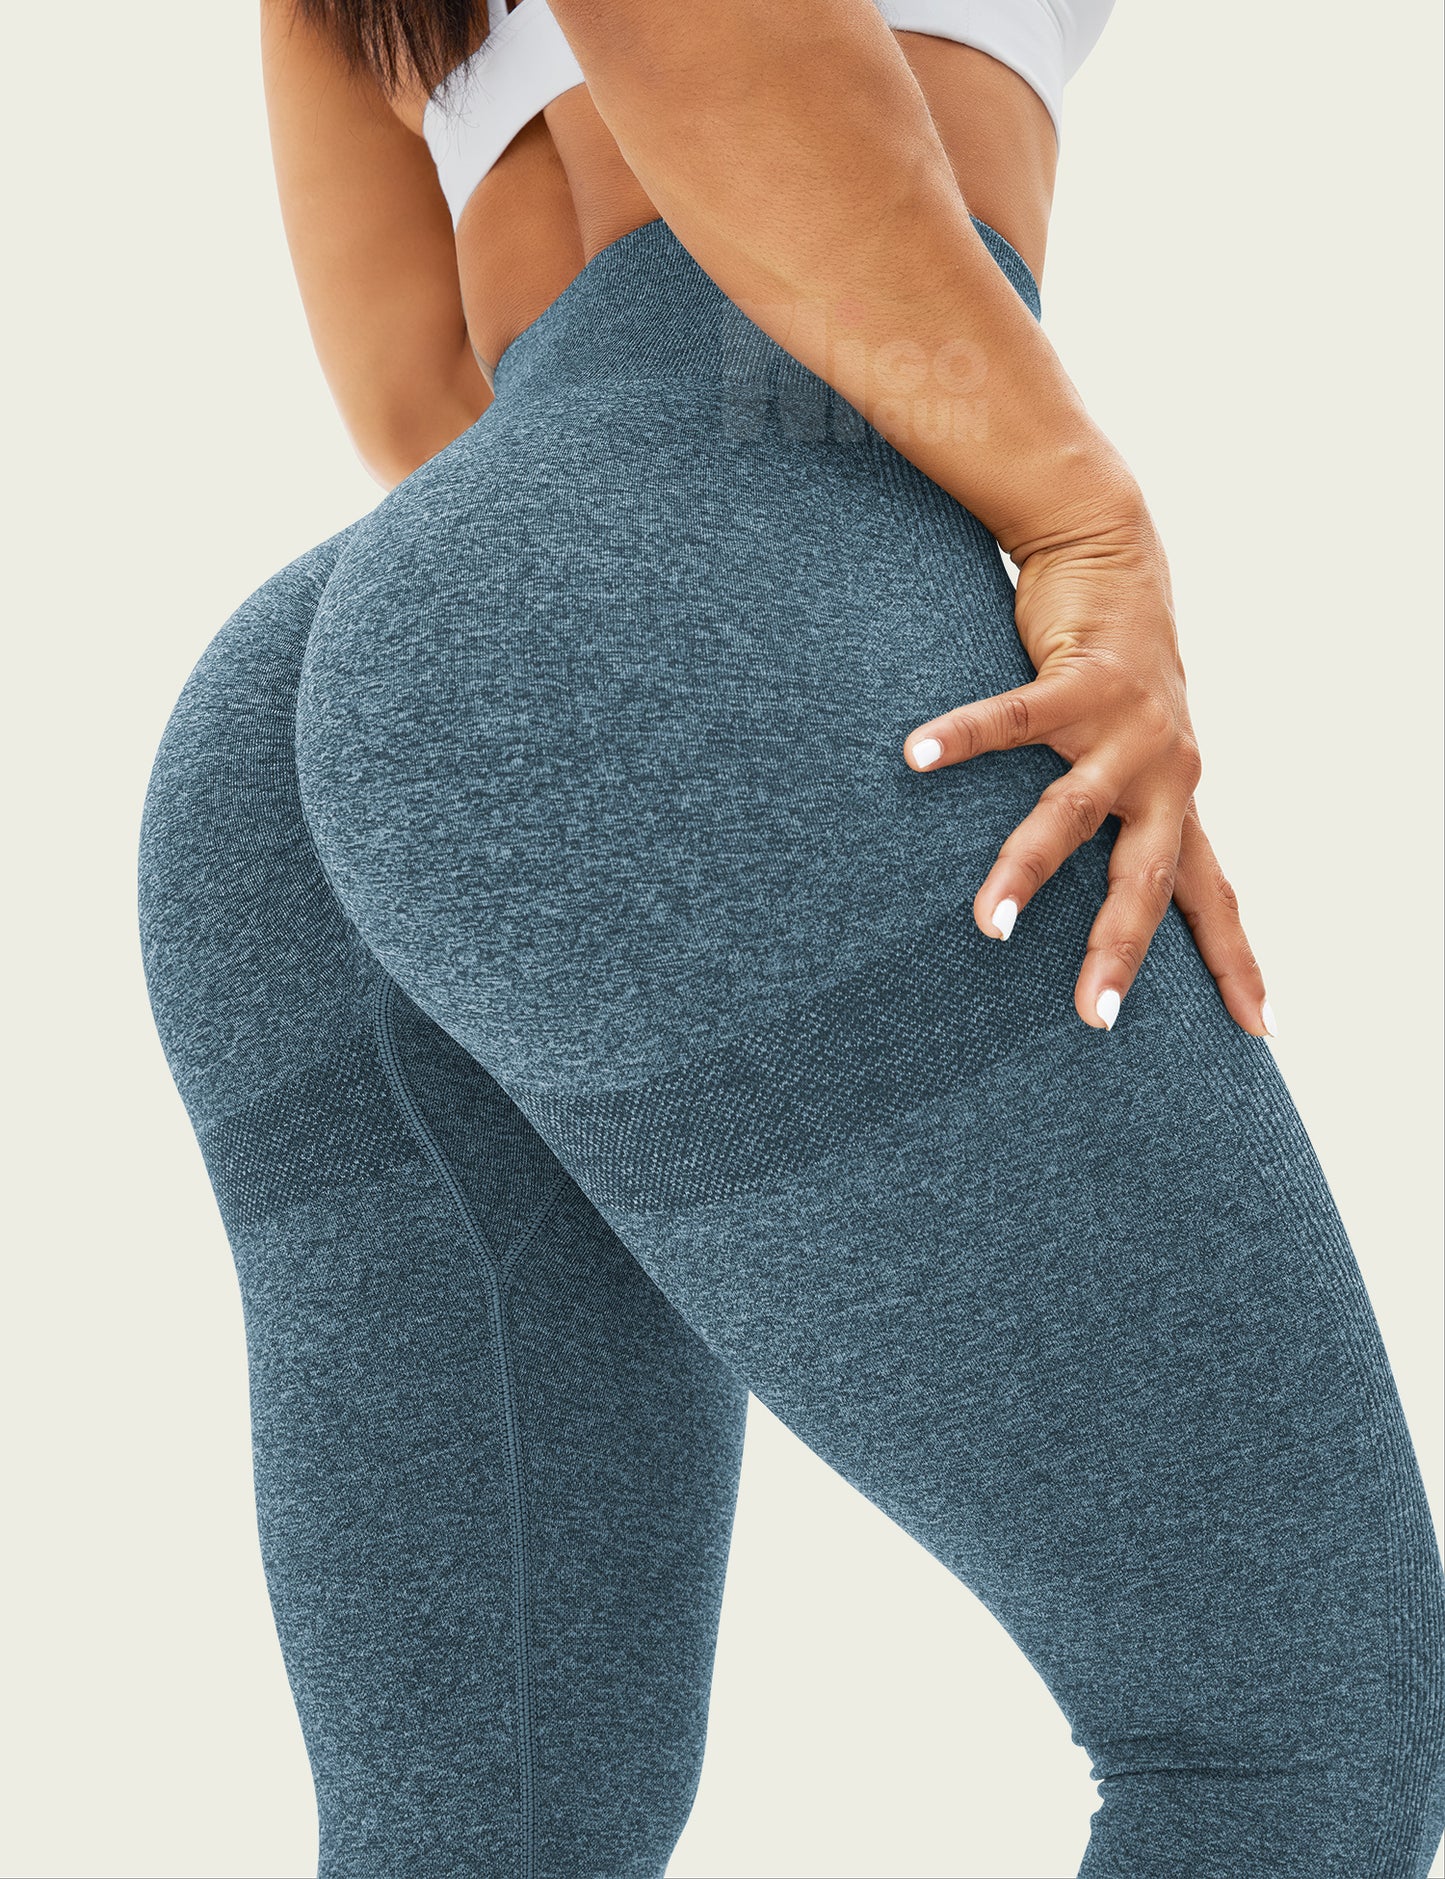 HIGORUN Tie Dye Workout Seamless Leggings for Women High Waist Gym Leggings Yoga Pants Blue